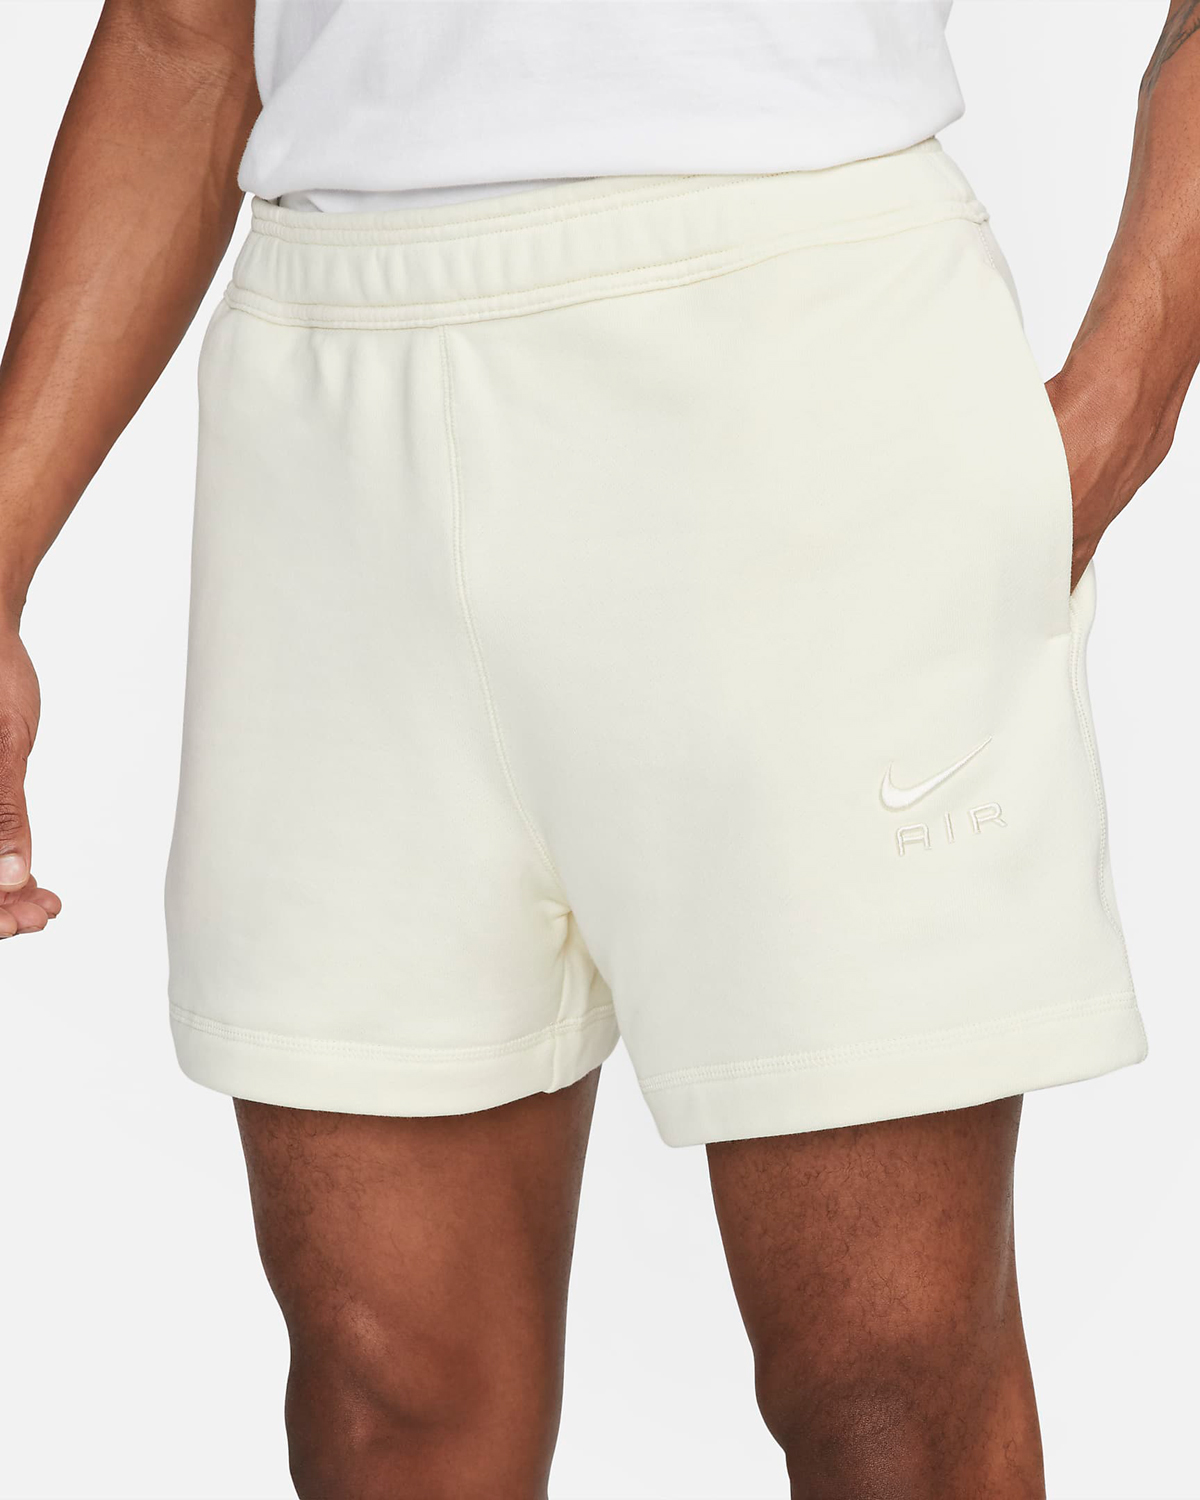 Nike-Sportswear-Air-French-Terry-Shorts-Coconut-Milk-2